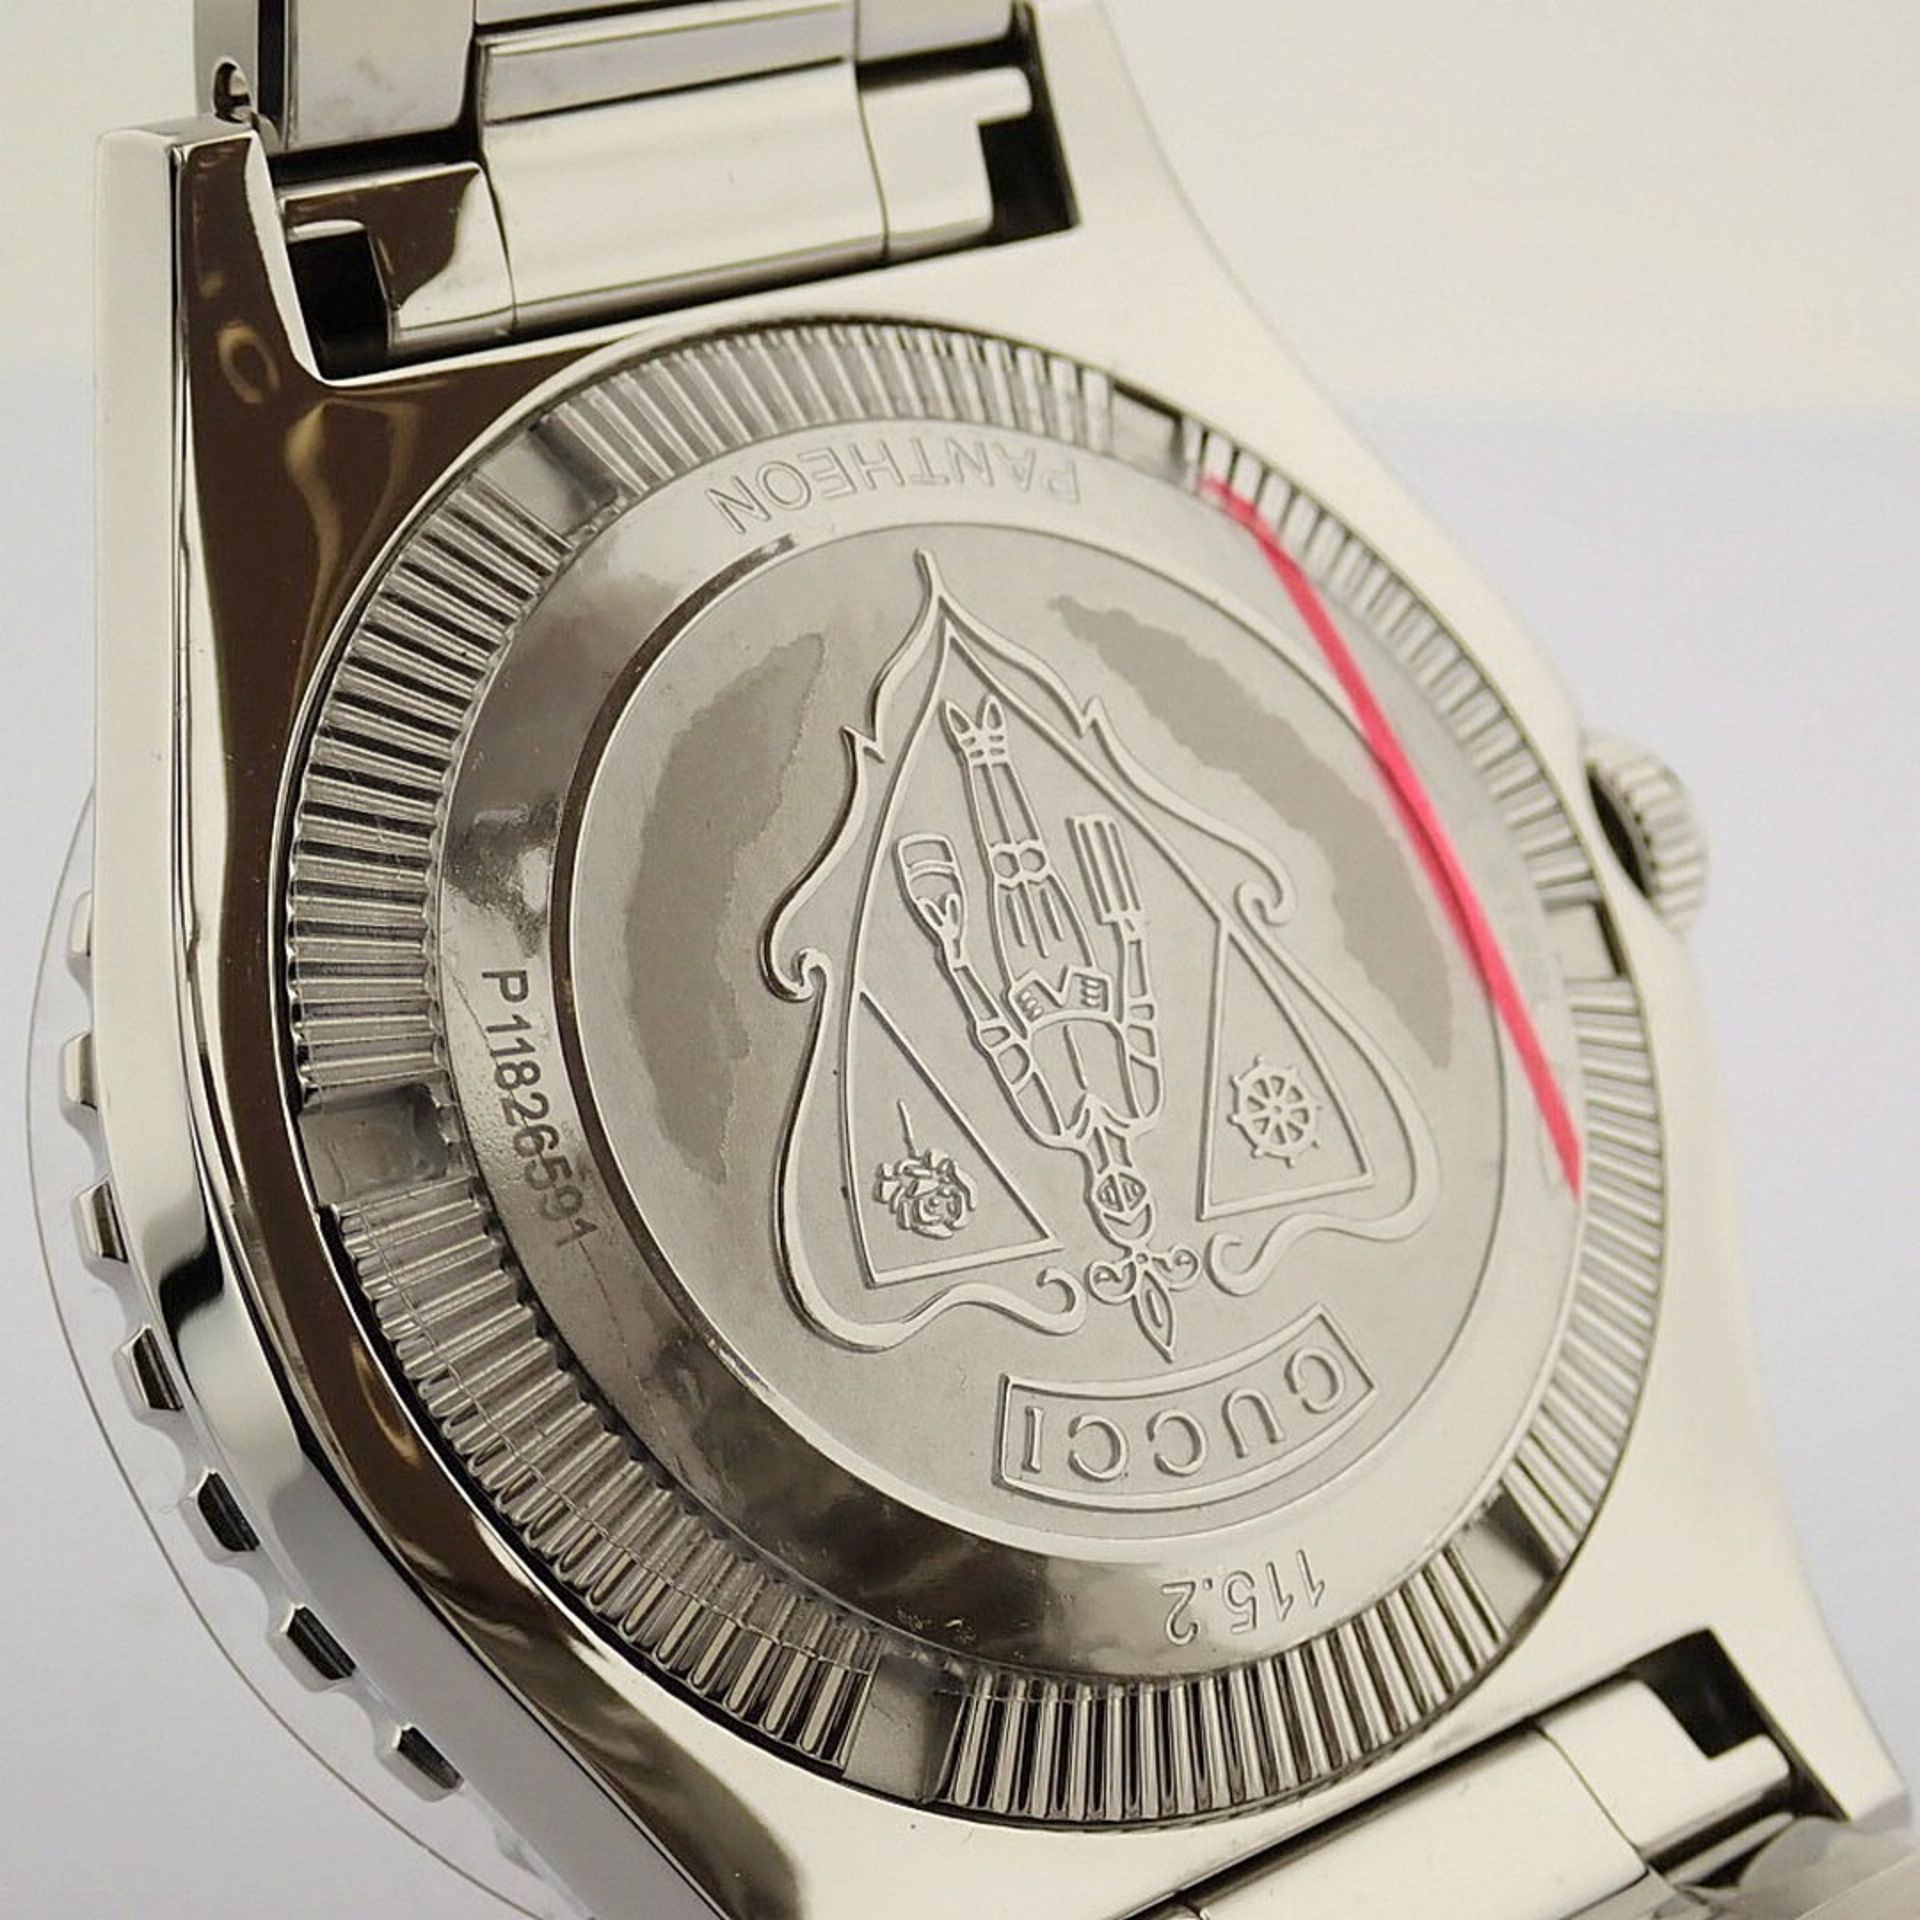 Gucci / Pantheon 115.2 (Brand New) - Gentlemen's Steel Wristwatch - Image 9 of 11